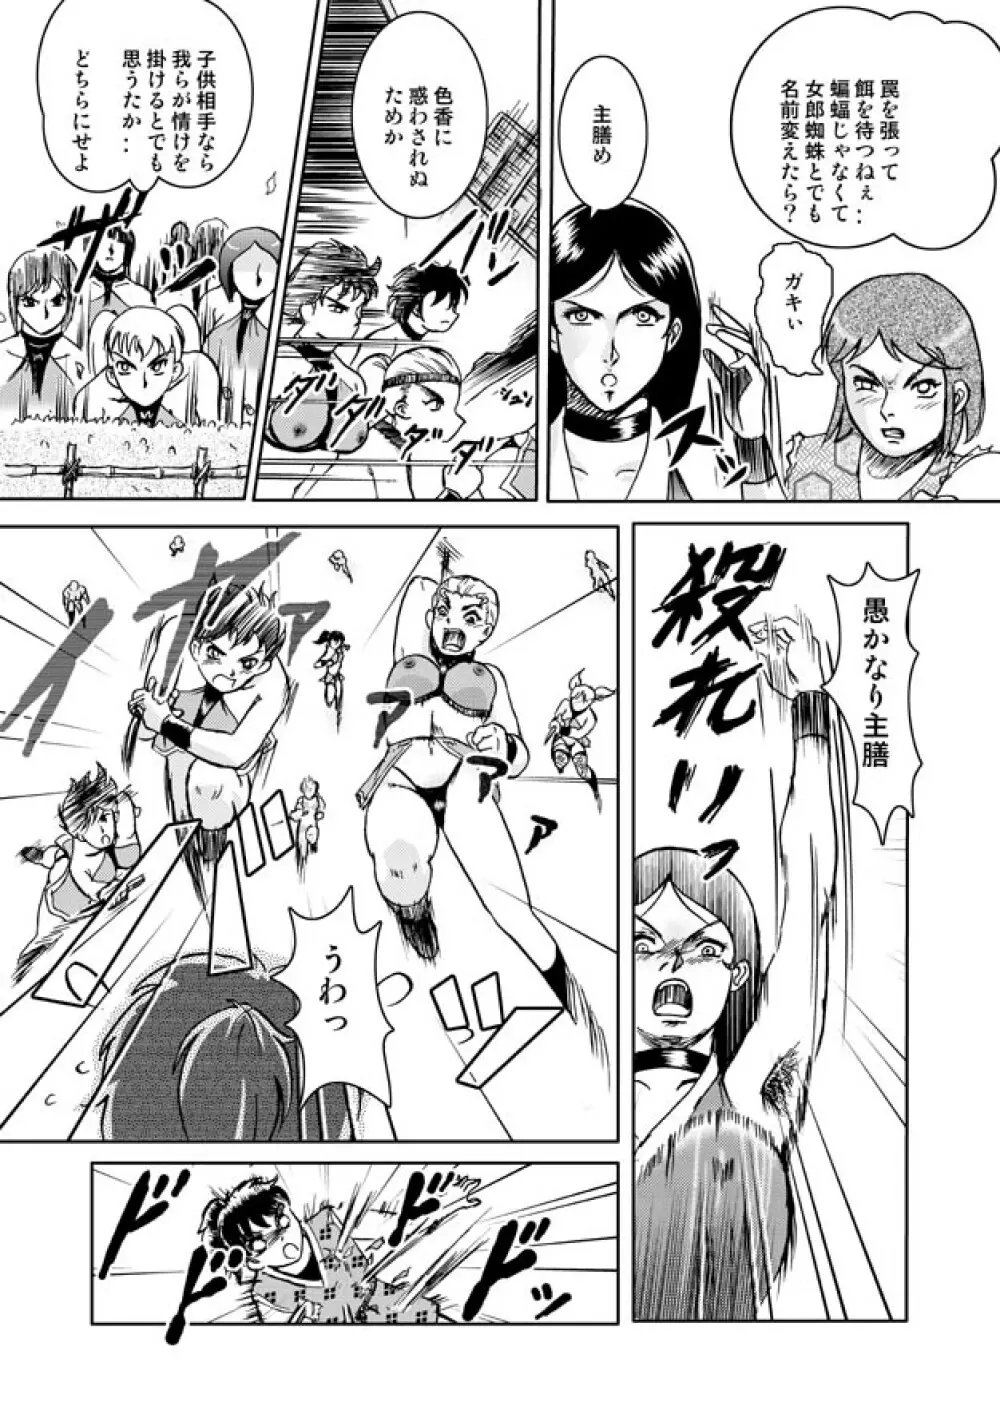 Same-themed manga about kid fighting female ninjas from japanese imageboard. 4ページ